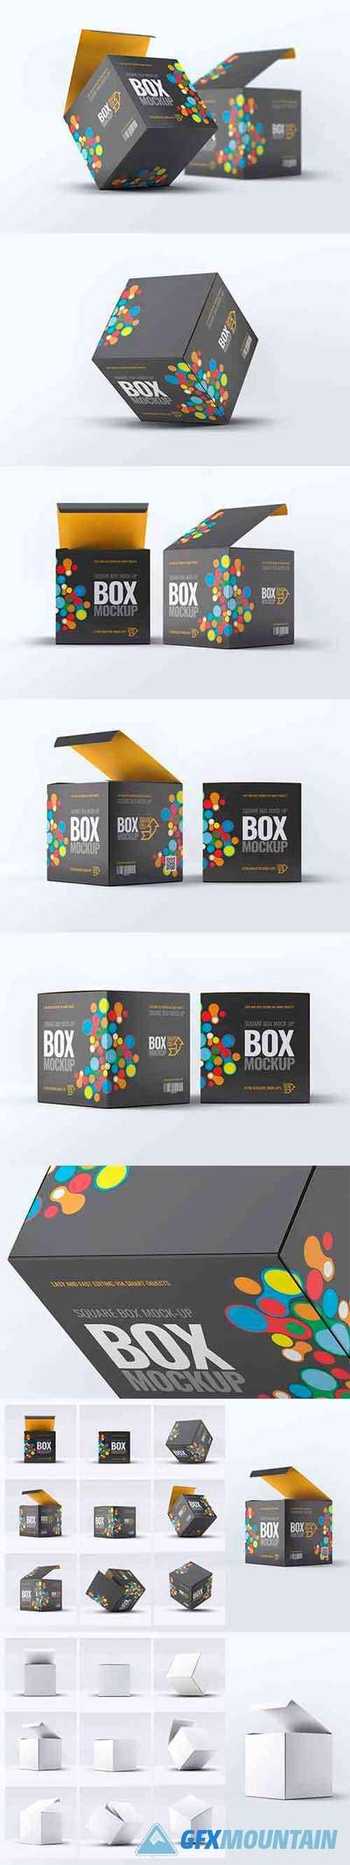 Square Box Mock-Up